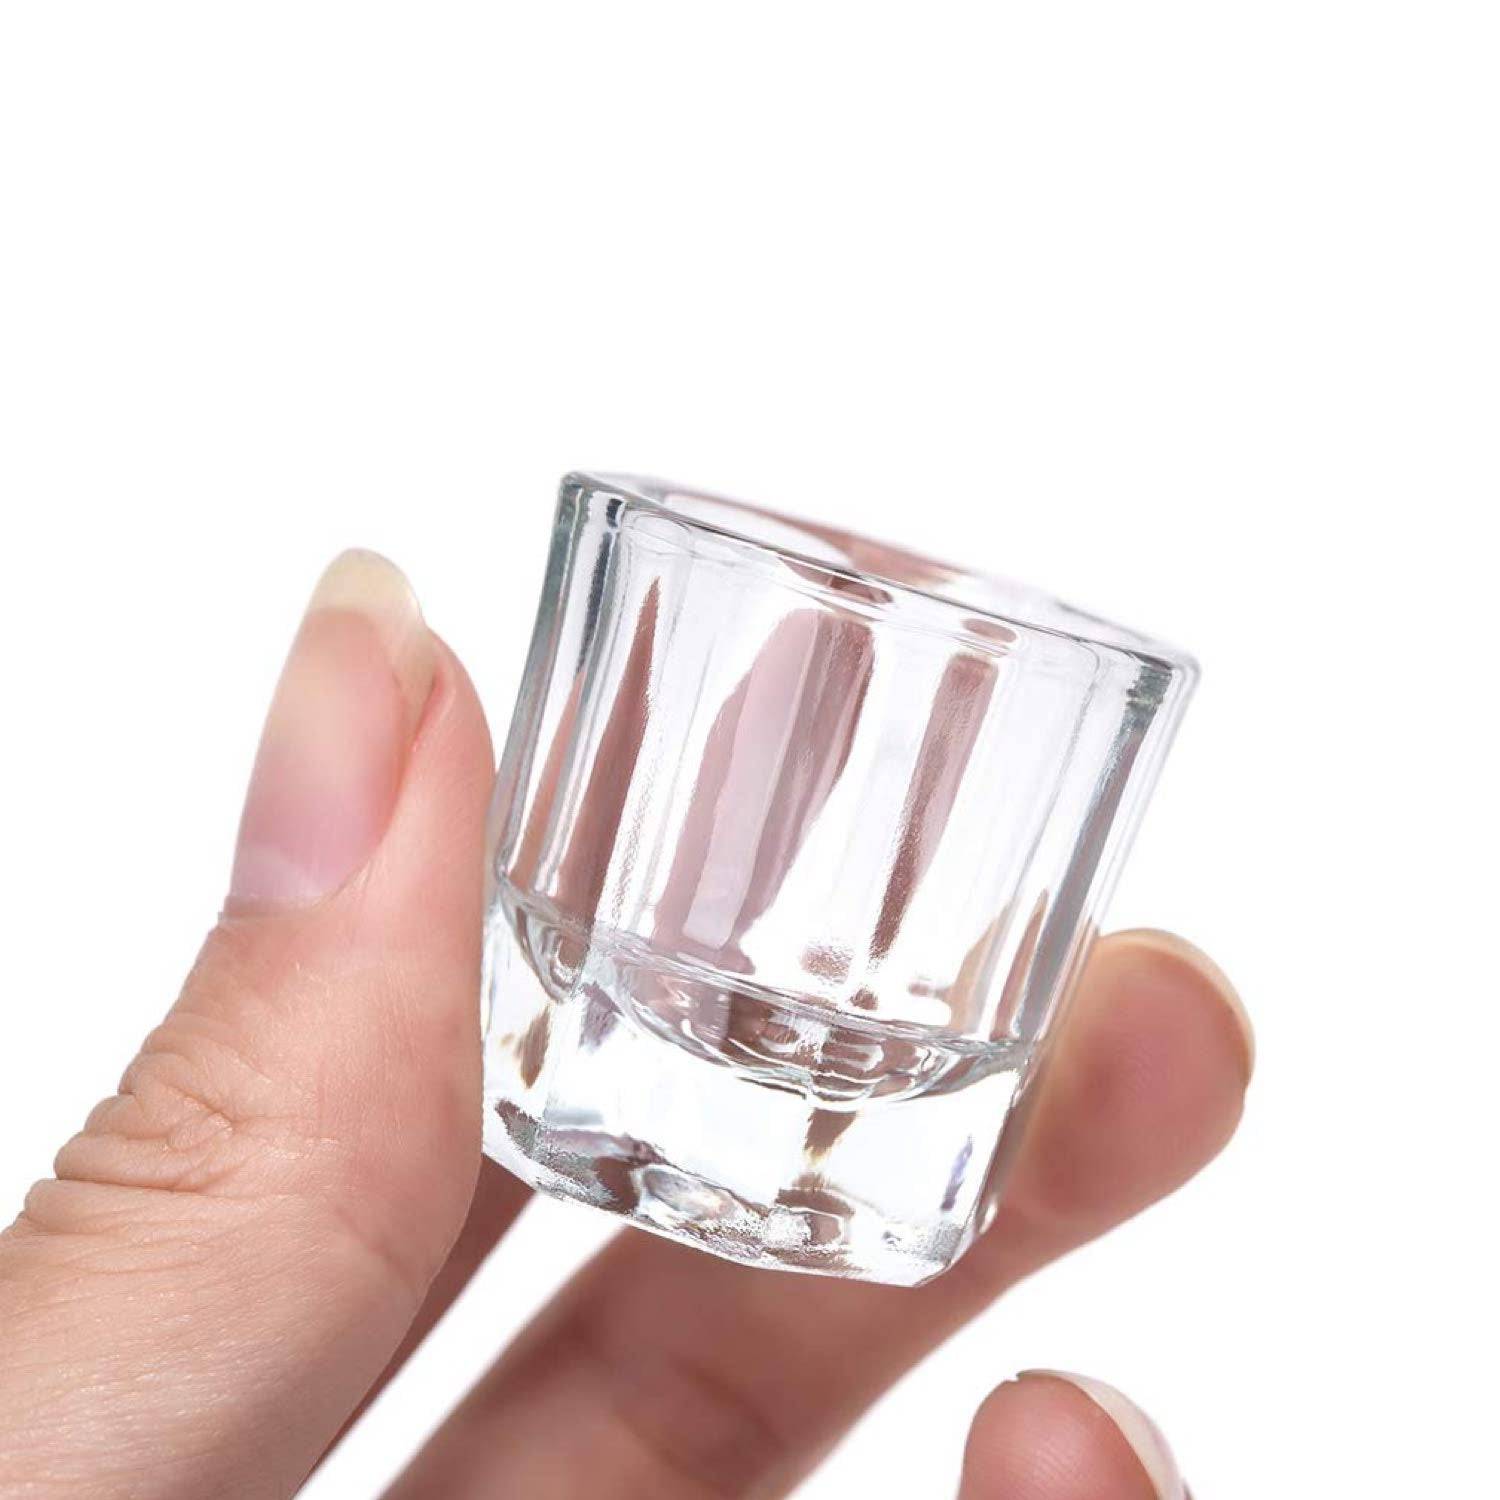 Crystal Glass Mini Liquid Container Bowl - Universal Nail Supplies